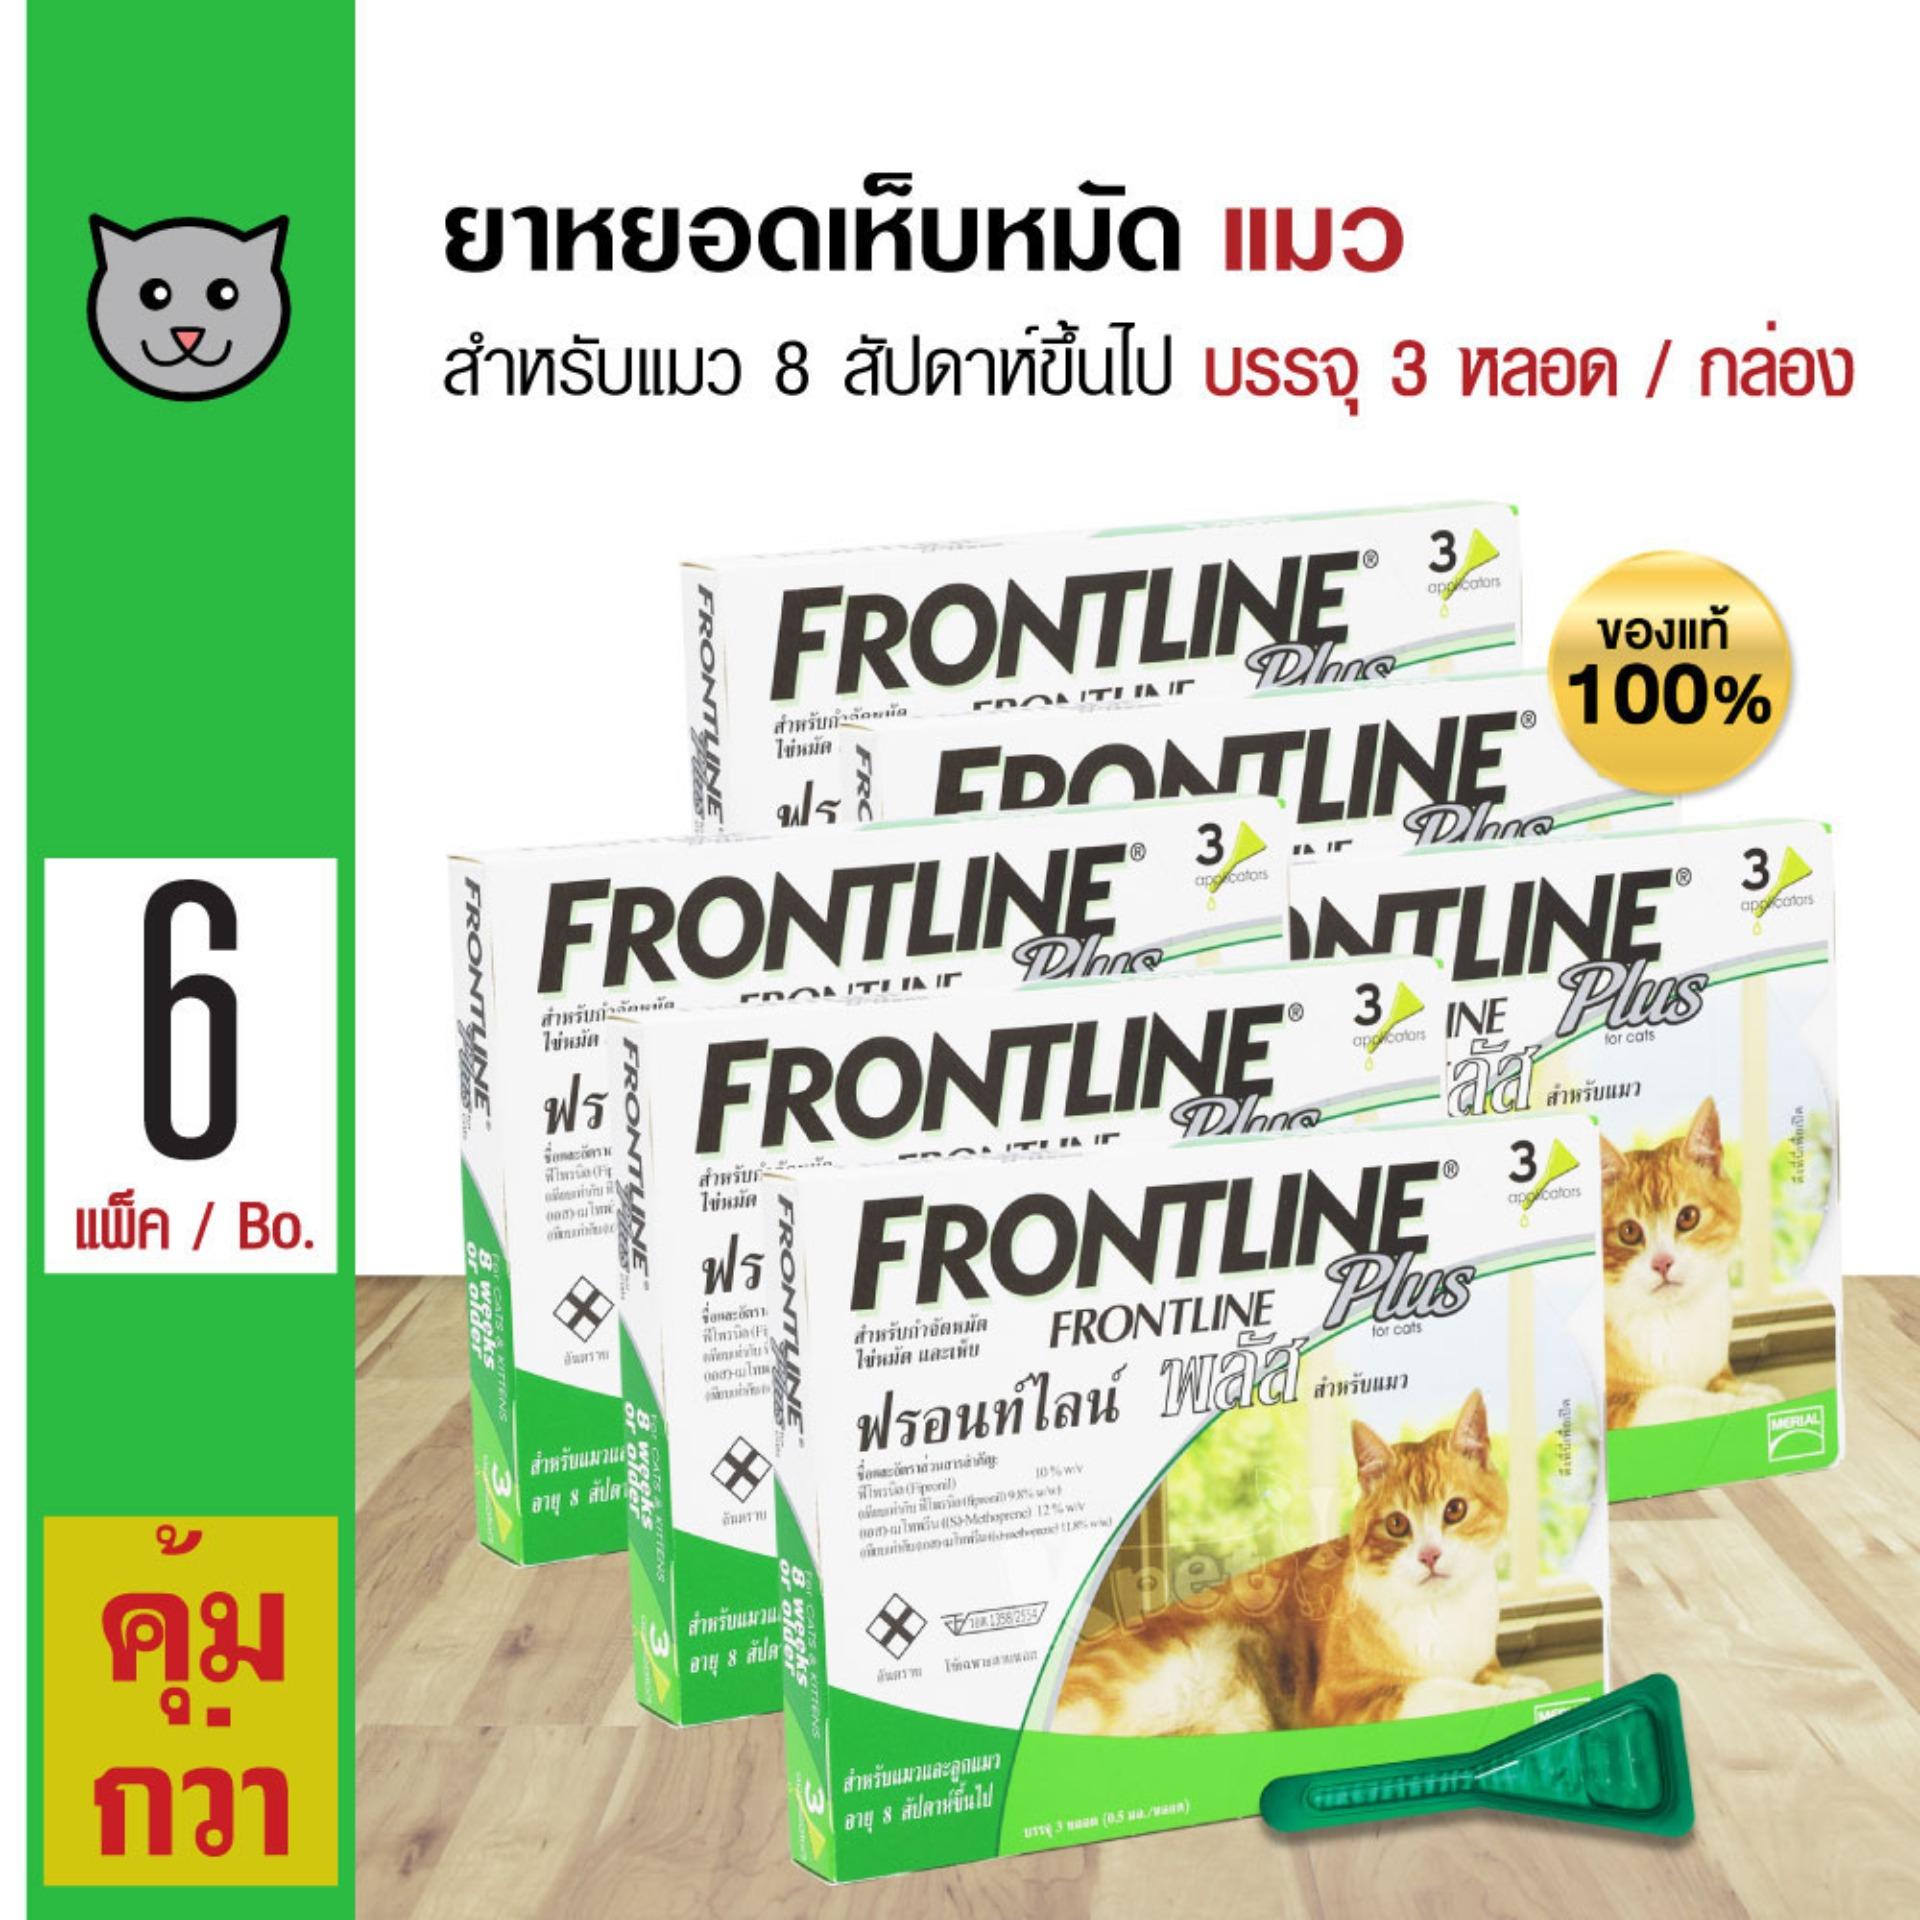 Frontline Plus Cat ยาหยอดหลัง กำจัดเห็บหมัด สำหรับแมวทุกสายพันธุ์ อายุ 8 สัปดาห์ขึ้นไป (3 หลอด/กล่อง) x 6 กล่อง